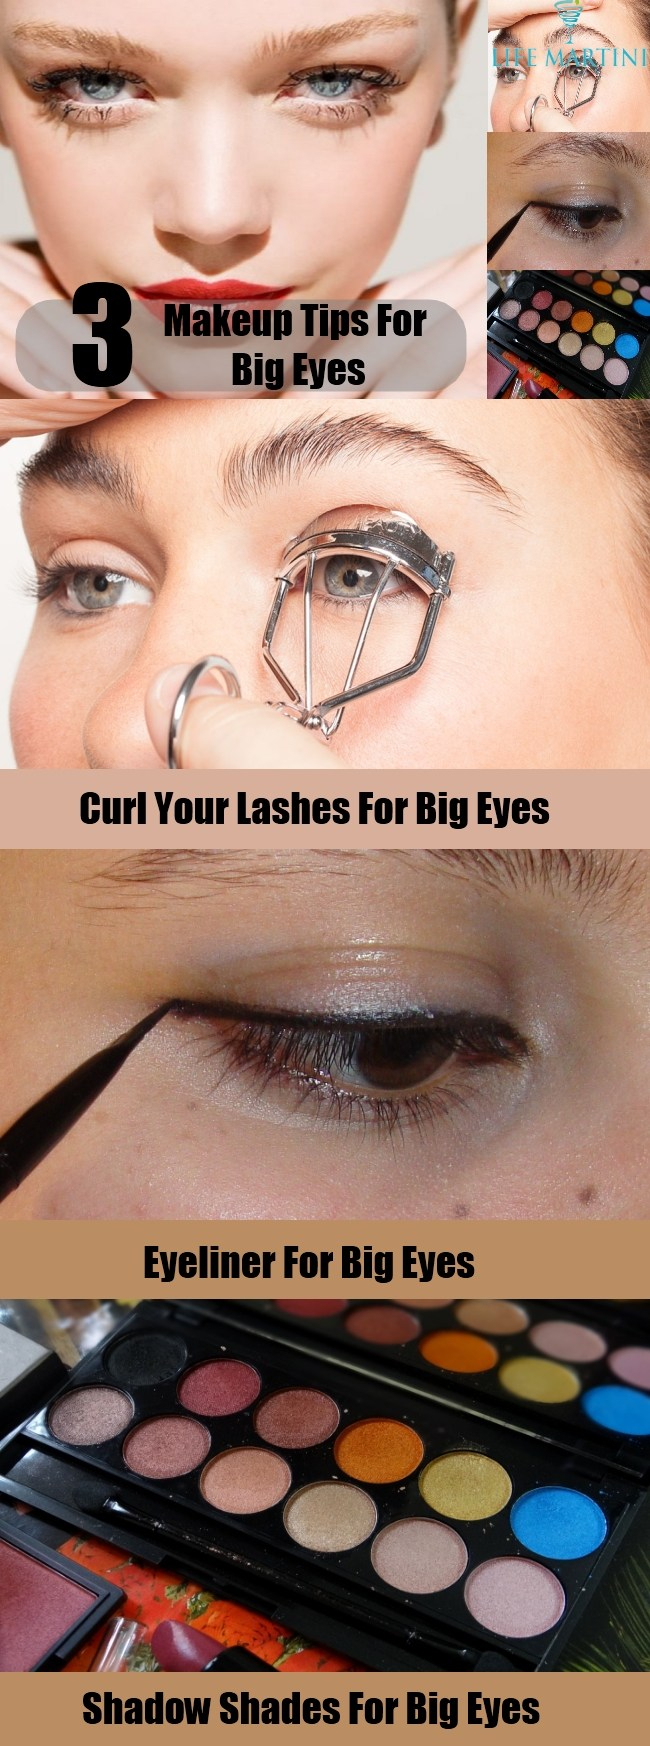 Makeup For Big Eyes 3 Quick Makeup Tips For Big Eyes How To Apply Makeup For Big Eyes